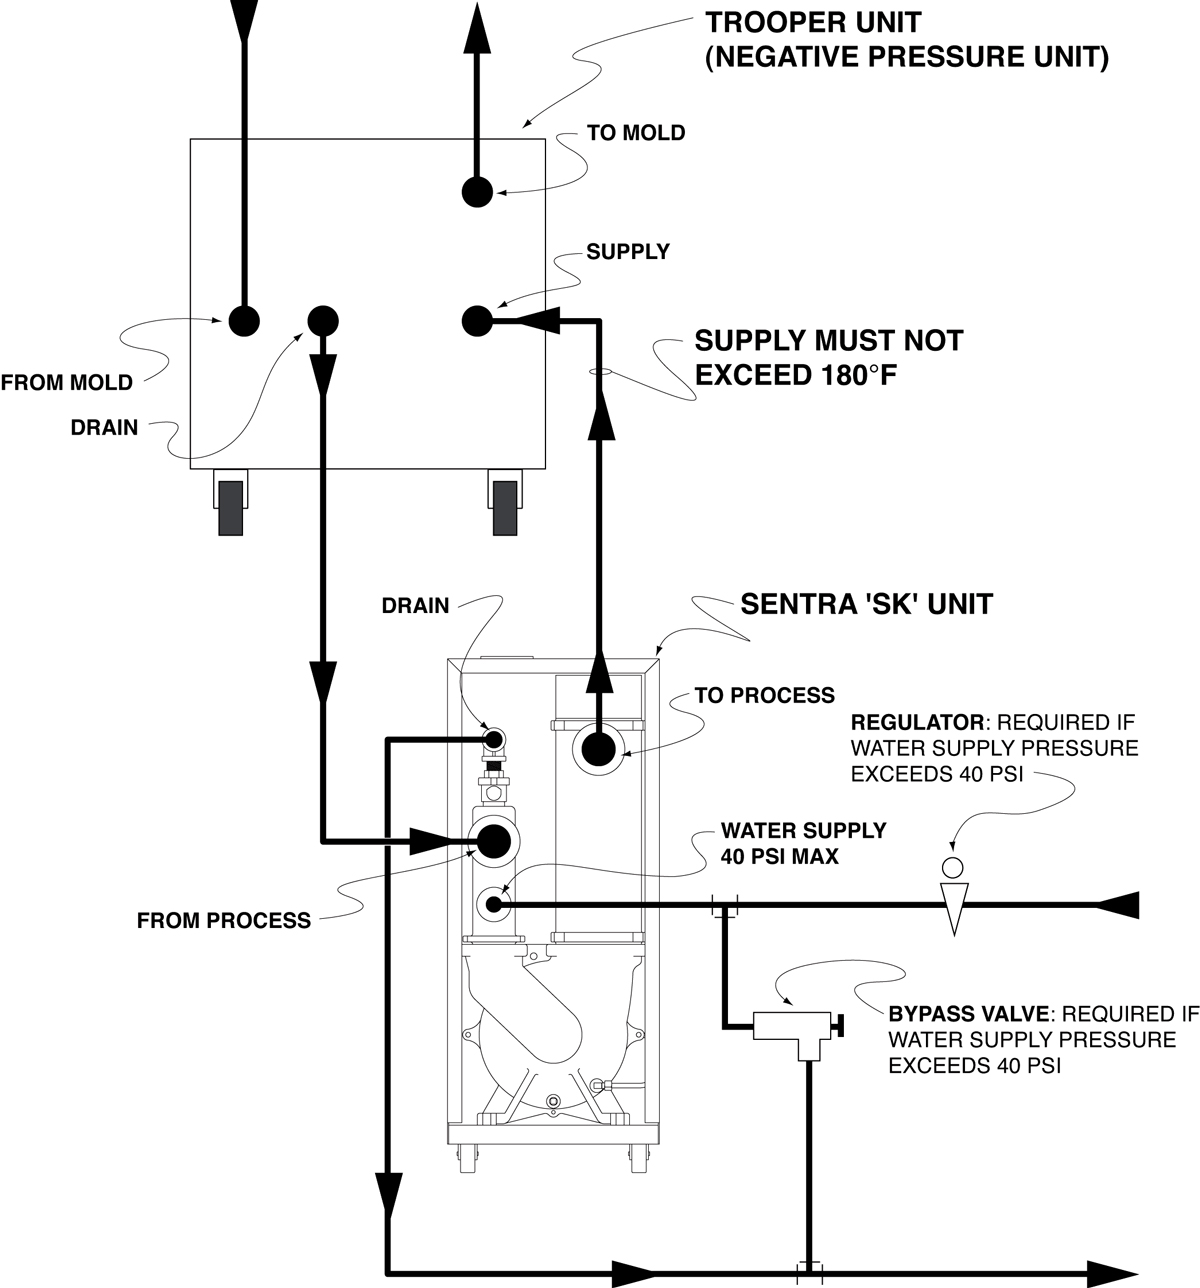 Piping Schematic : Negative Pressure Unit and Temperature Controller